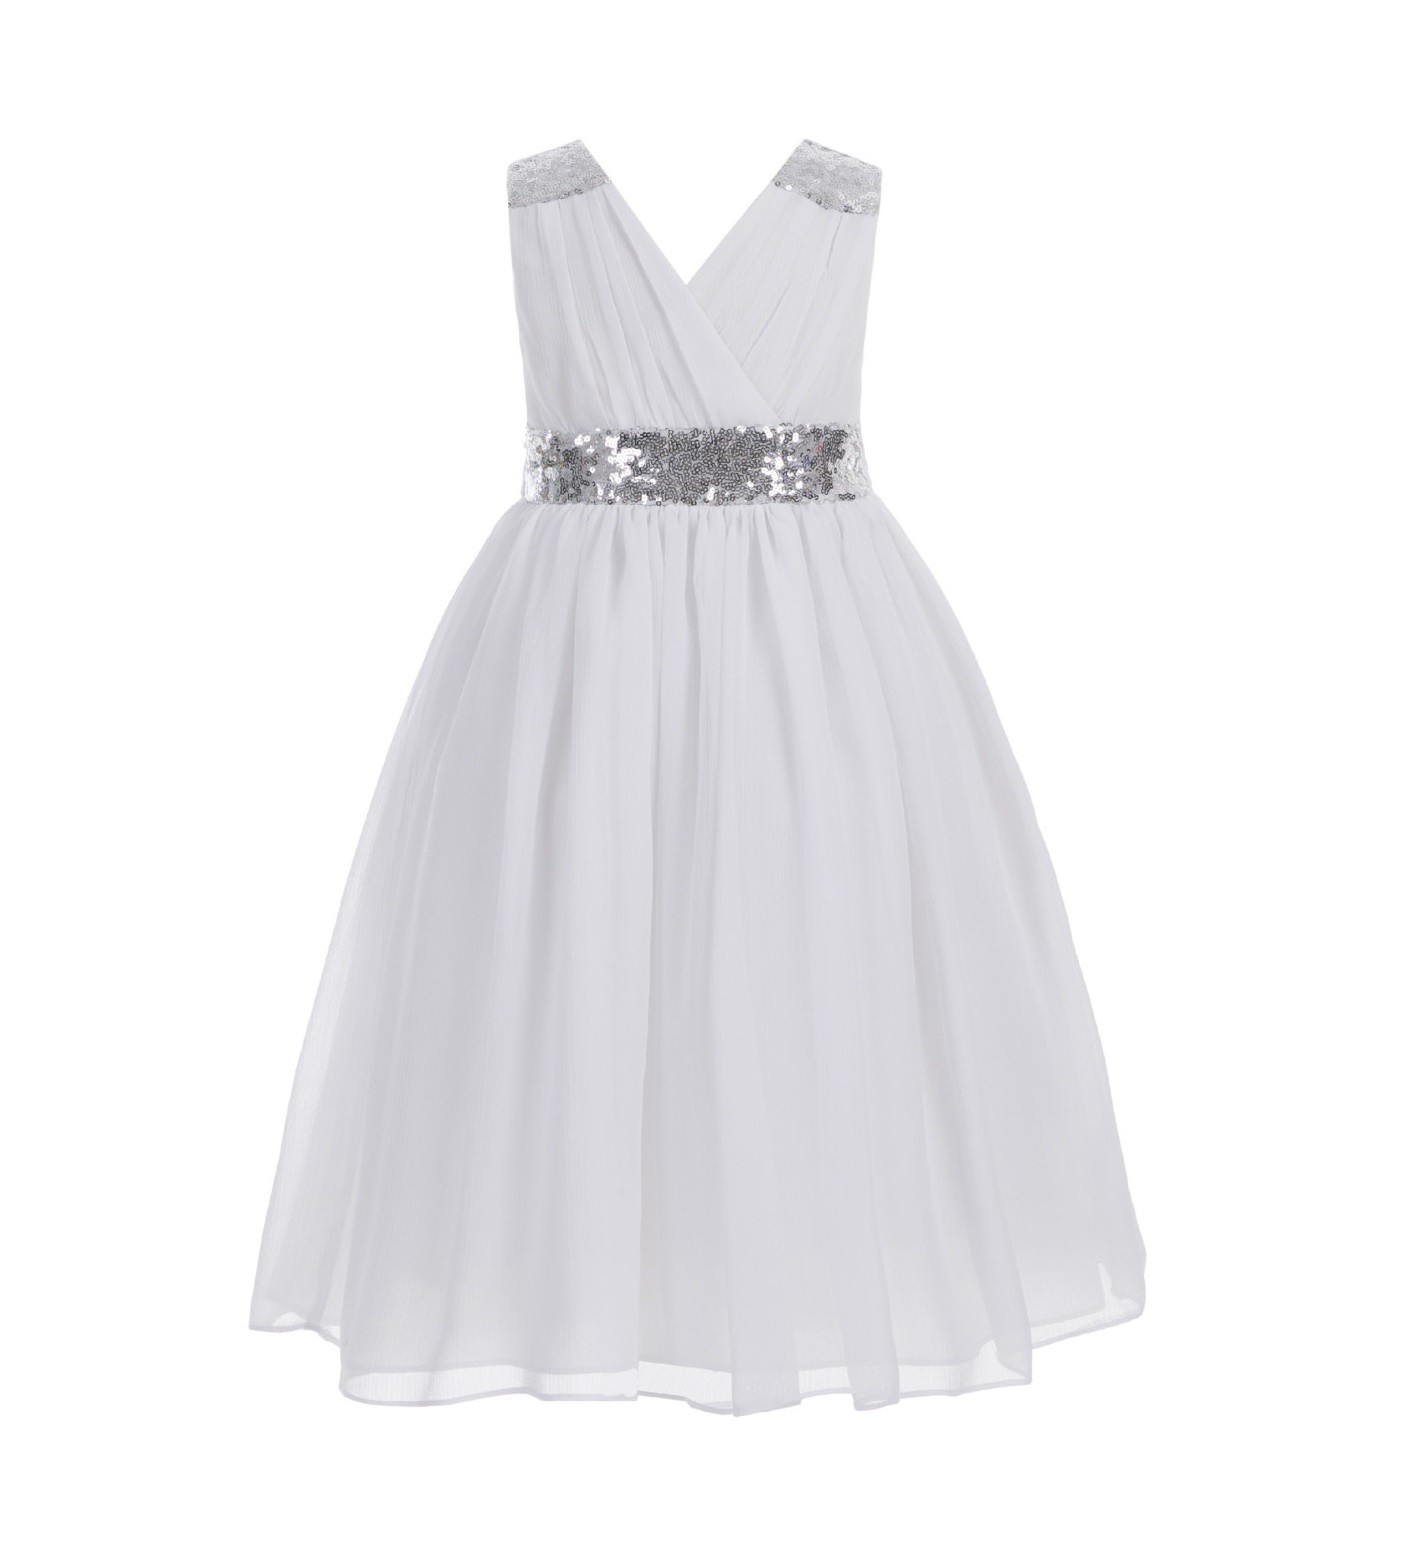 White Sequins Chiffon Flower Girl Dress 187